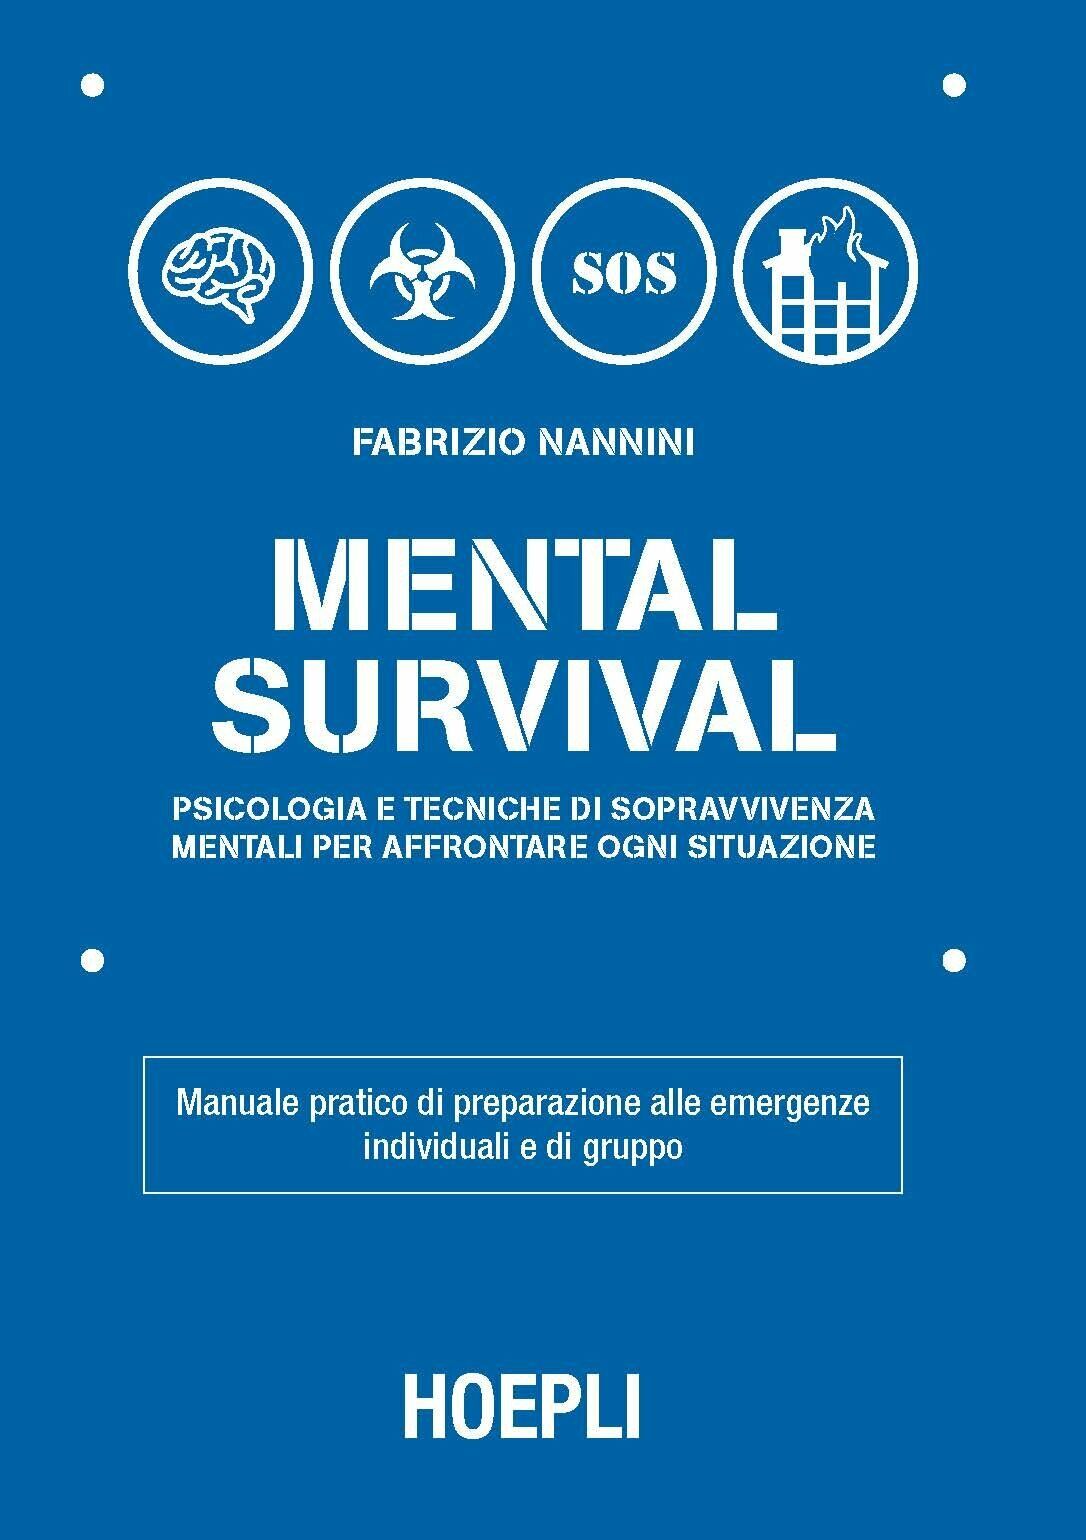 Mental survival - Fabrizio Nannini - hoepli, 2016